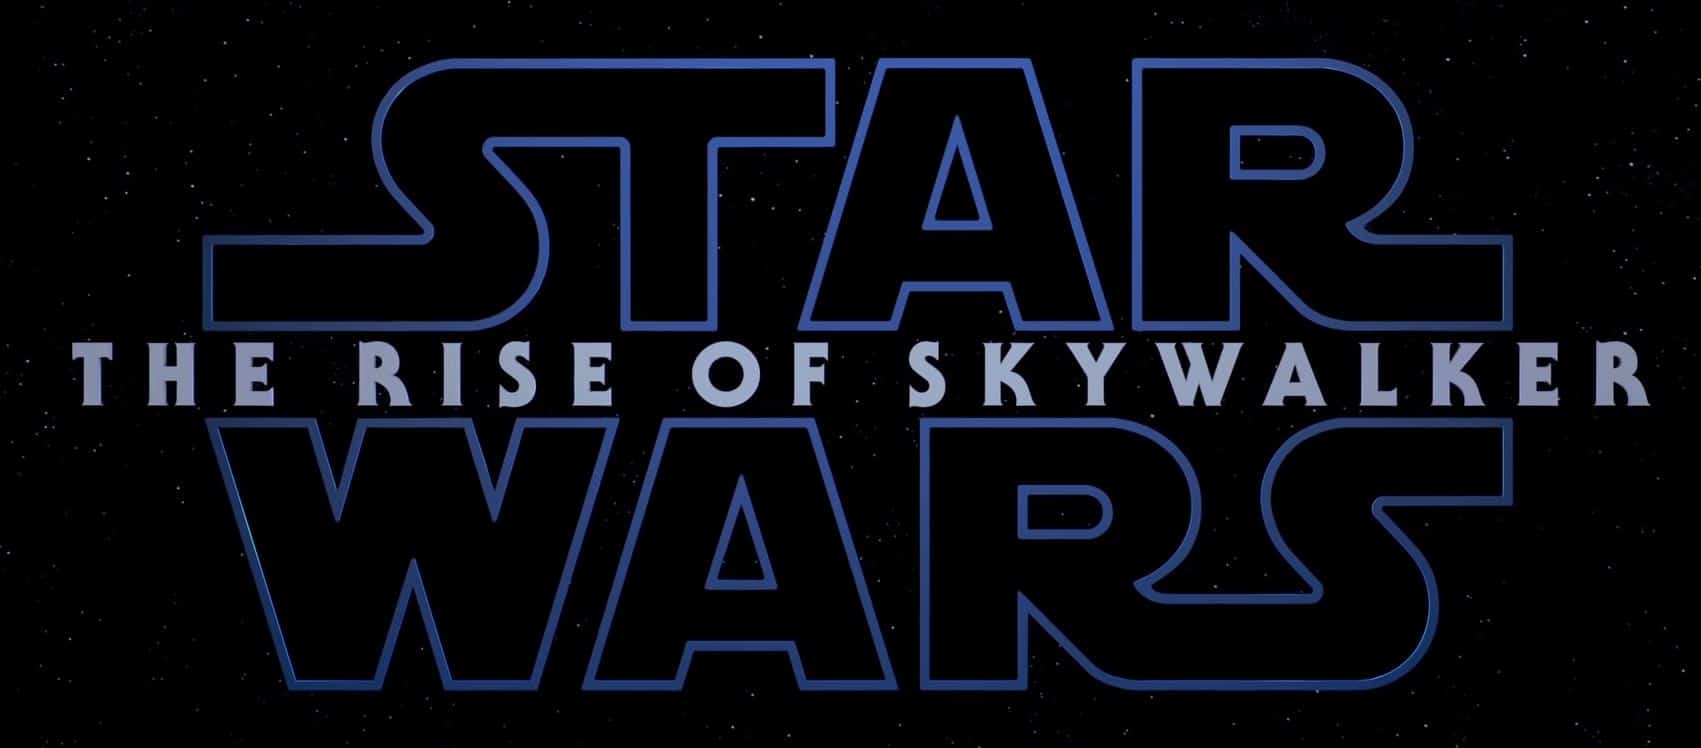 Star Wars Episode IX: The Rise of Skywalker